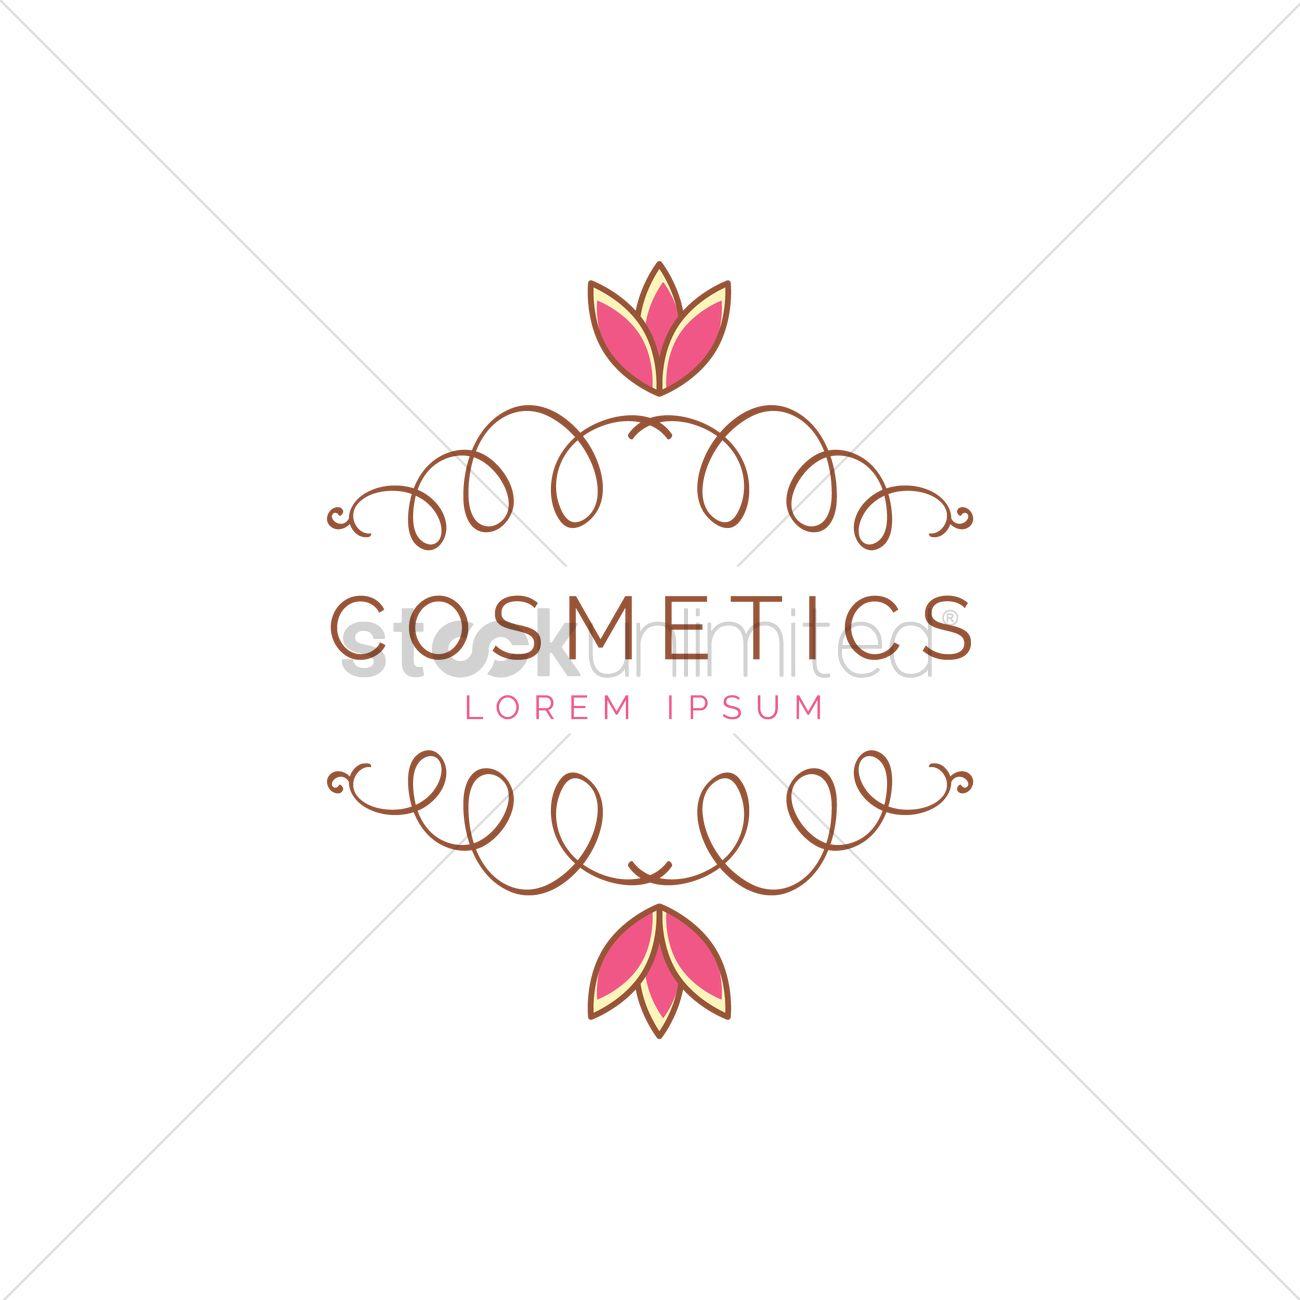 Cosmetics Logo - Cosmetics logo element Vector Image